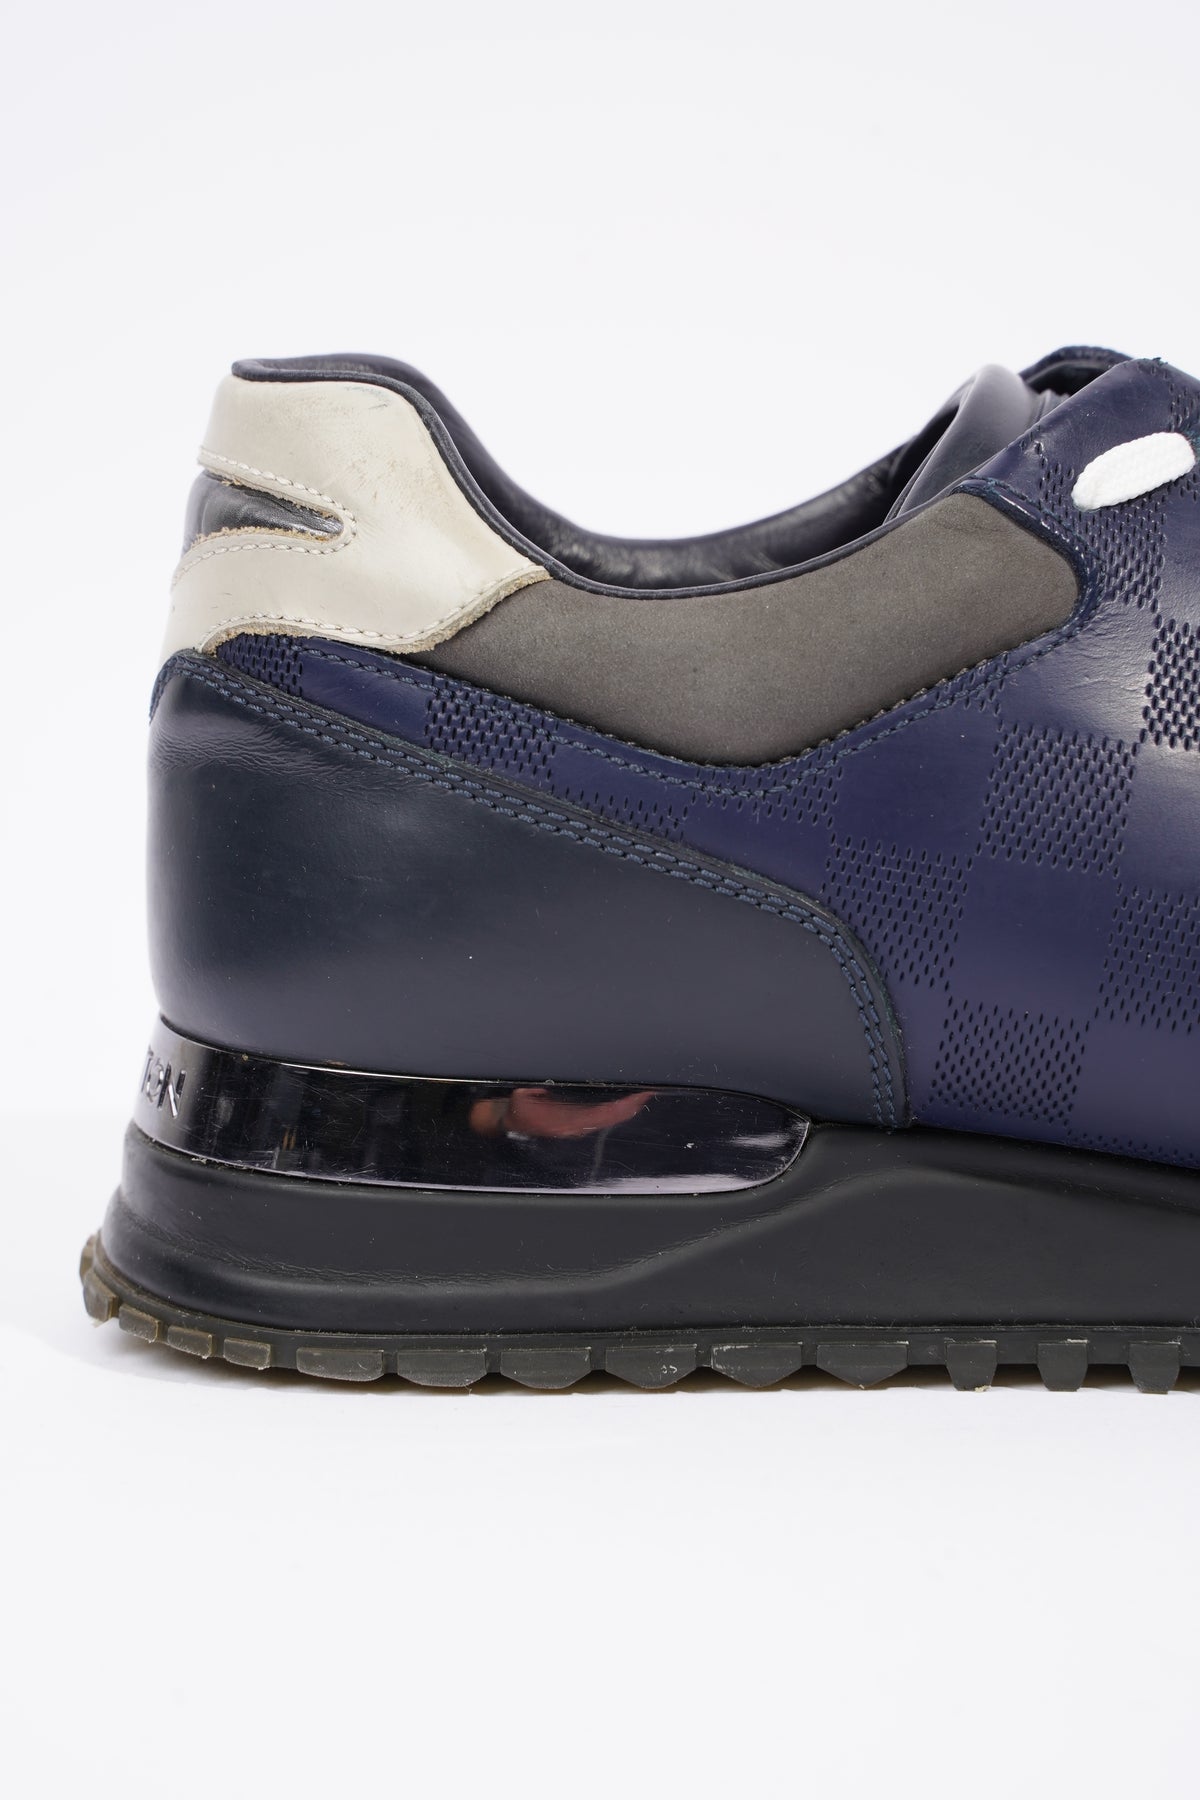 LOUIS VUITTON NAVY Blue Suede Run Away Sneakers Size 38.5 £300.00 -  PicClick UK